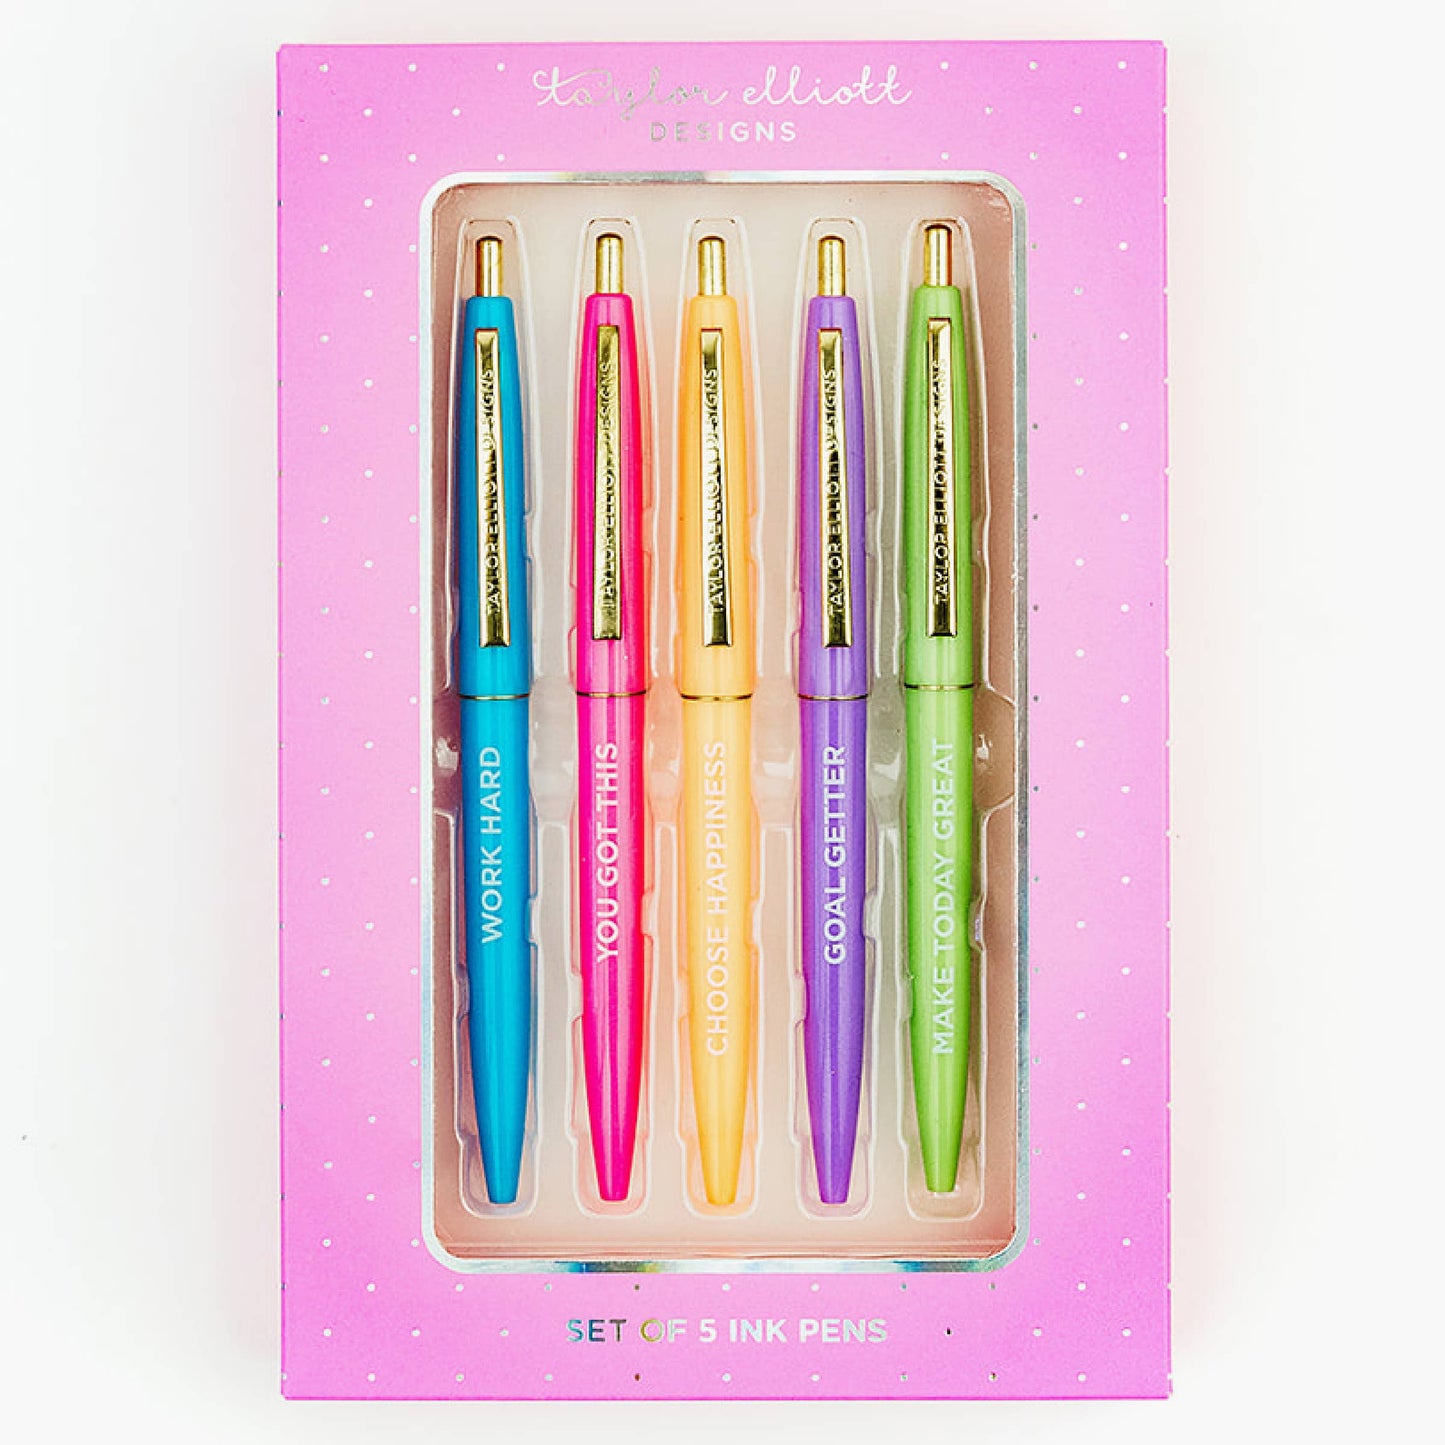 Taylor Elliott Designs - Motivational Pen Set in Gift Box